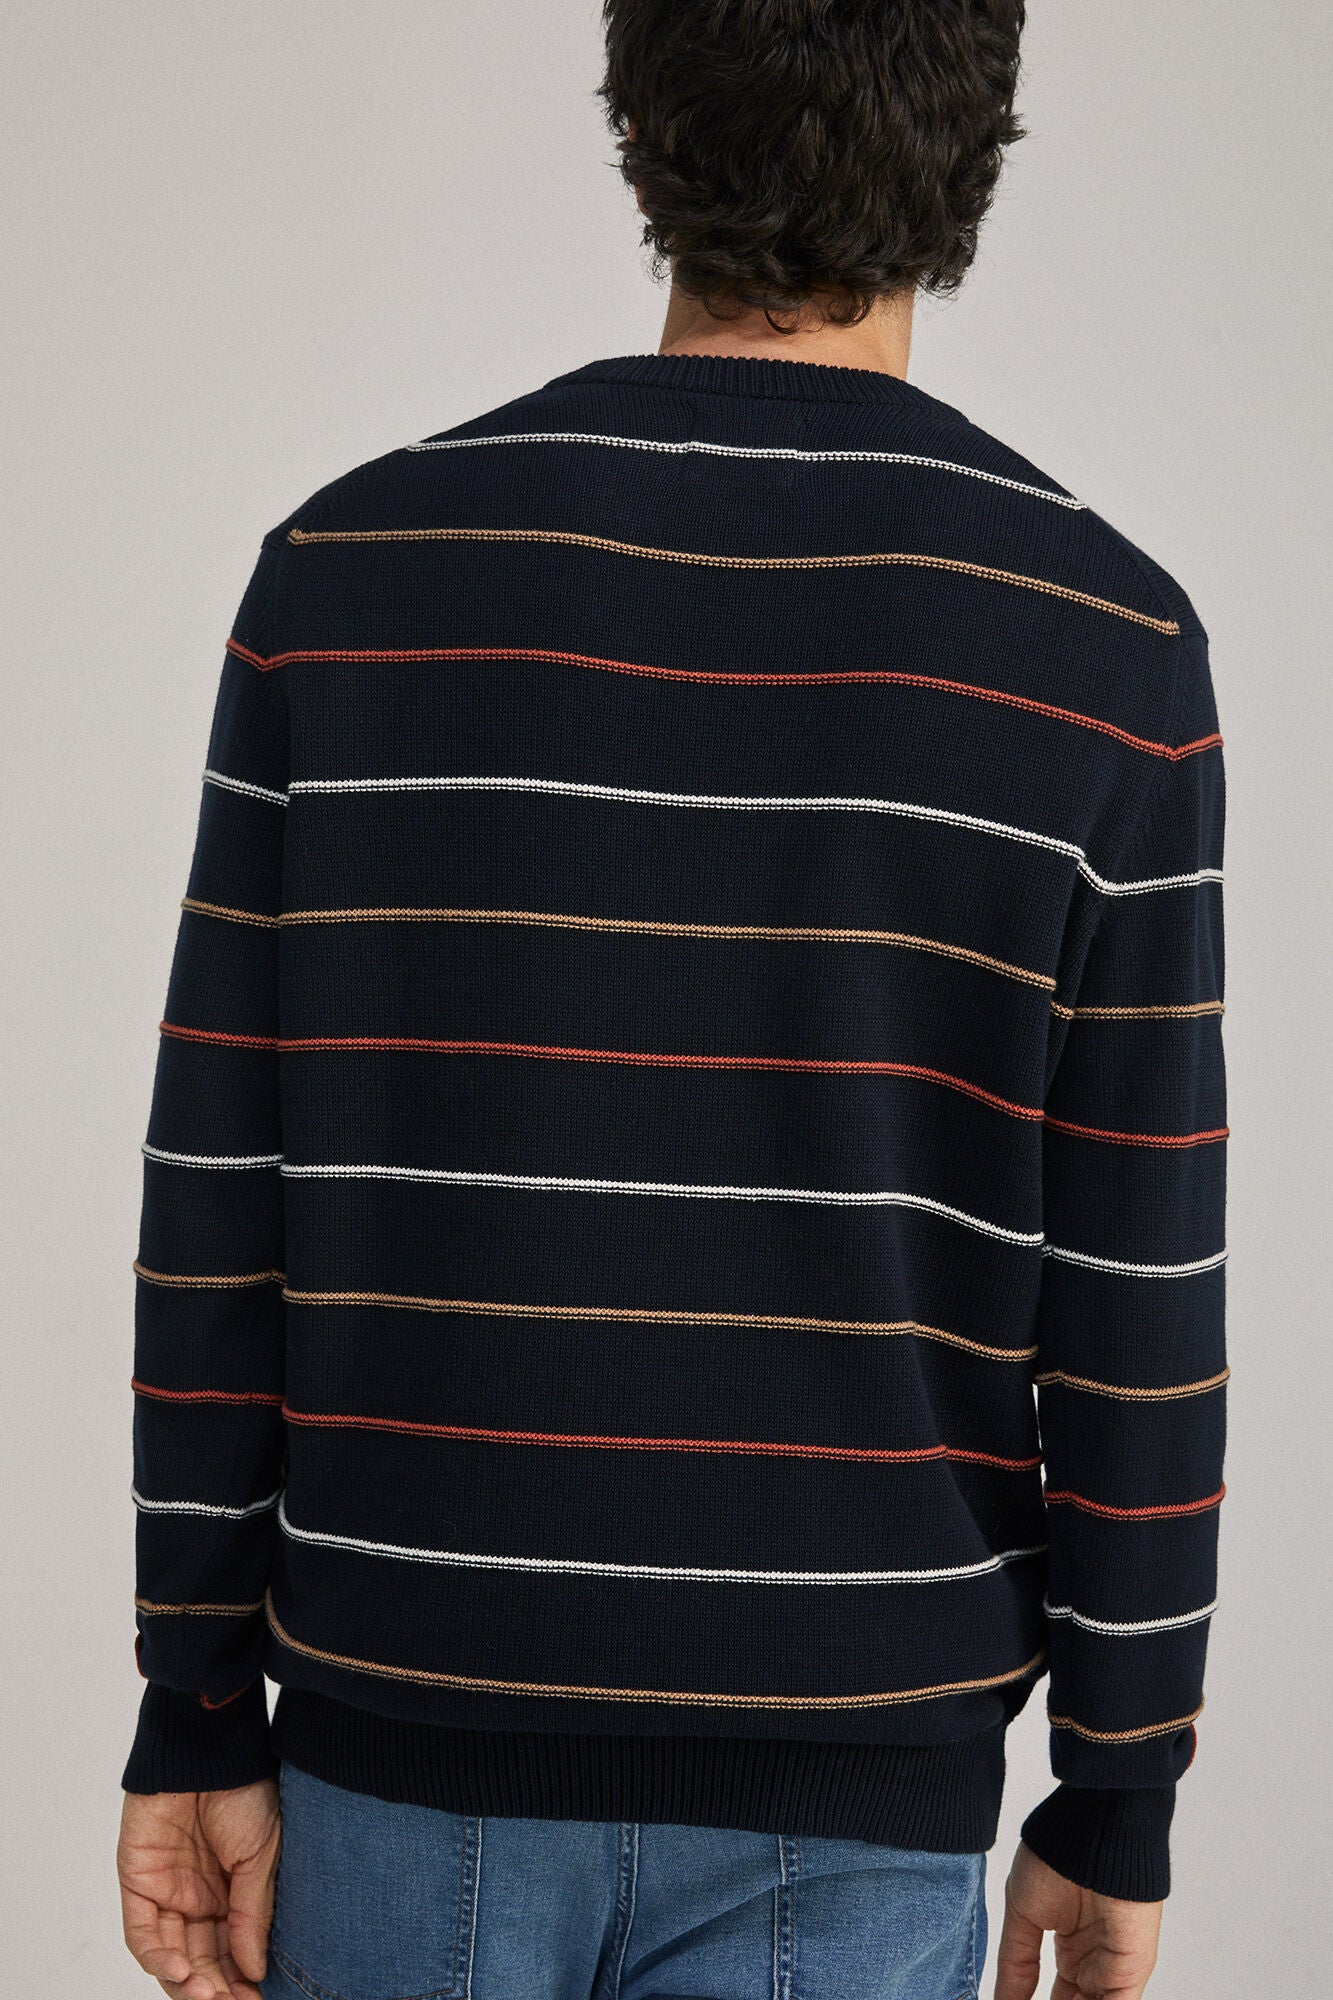 Indigo textured weave shirt (Custom Fit)